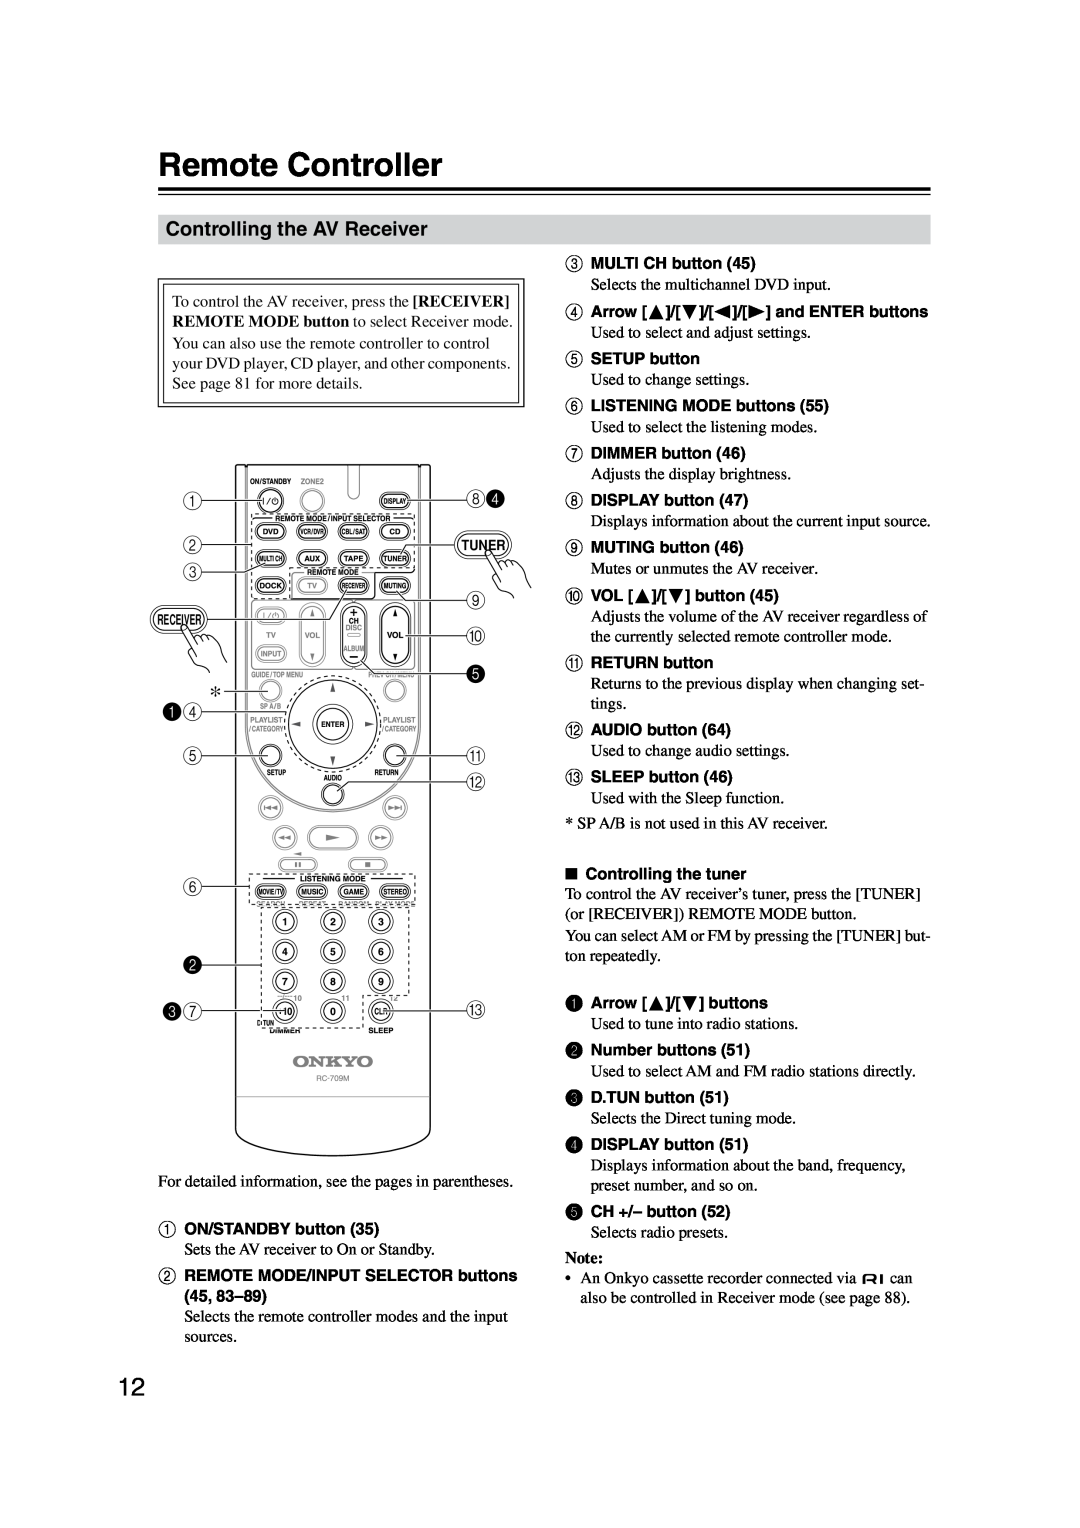 Onkyo TX-SR506, TX-SR576 instruction manual Remote Controller, Controlling the AV Receiver 